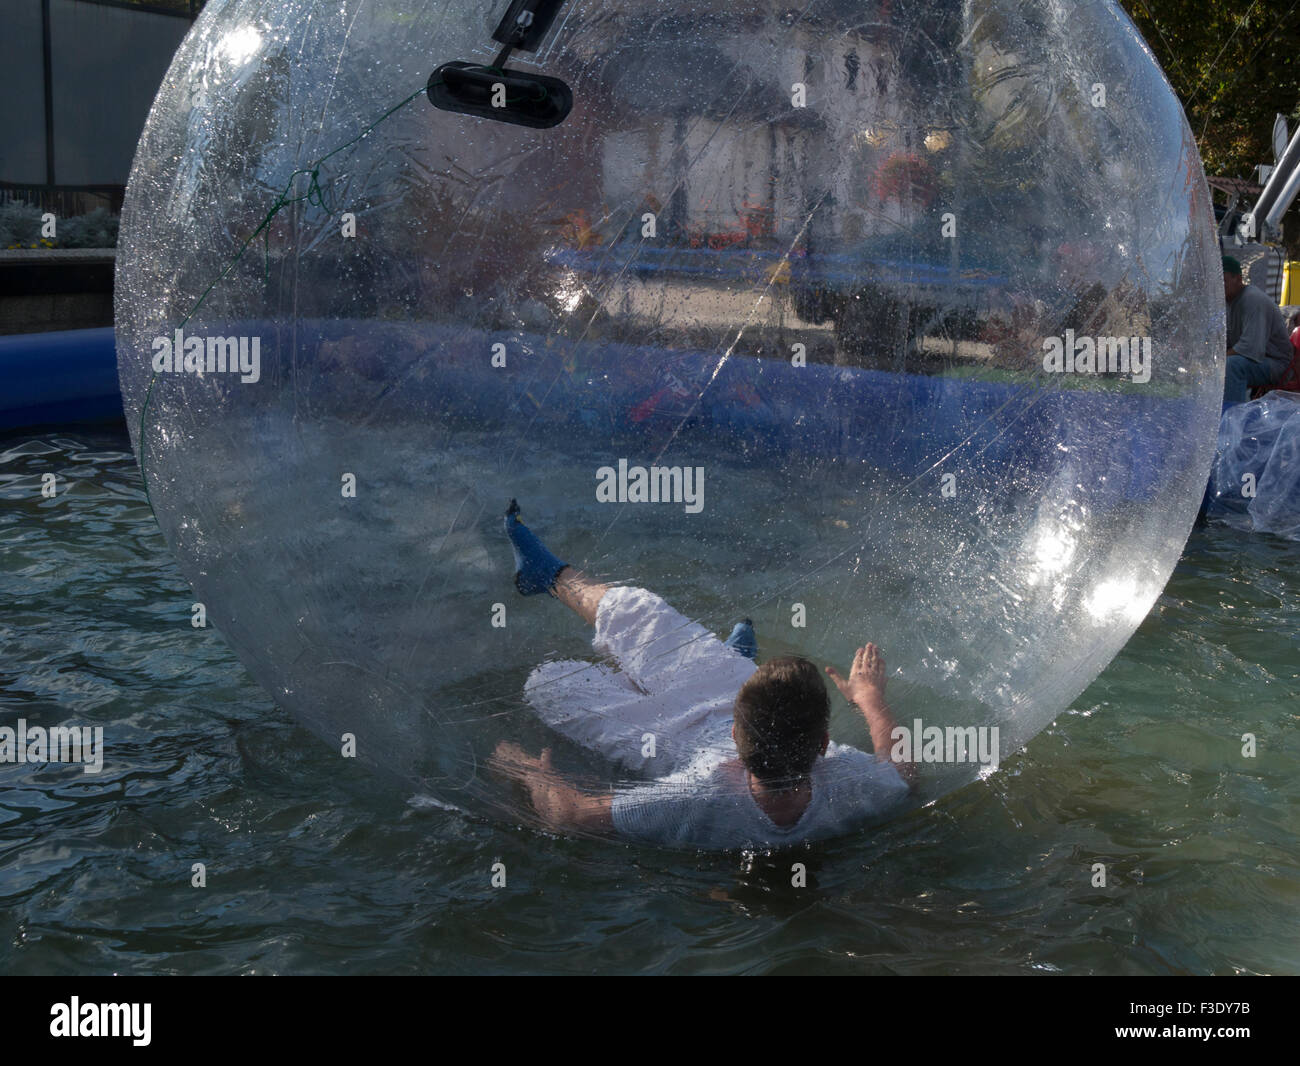 Joven agua caminar y rodar en agua inflables burbuja Polonia en piscina de bolas Foto de stock